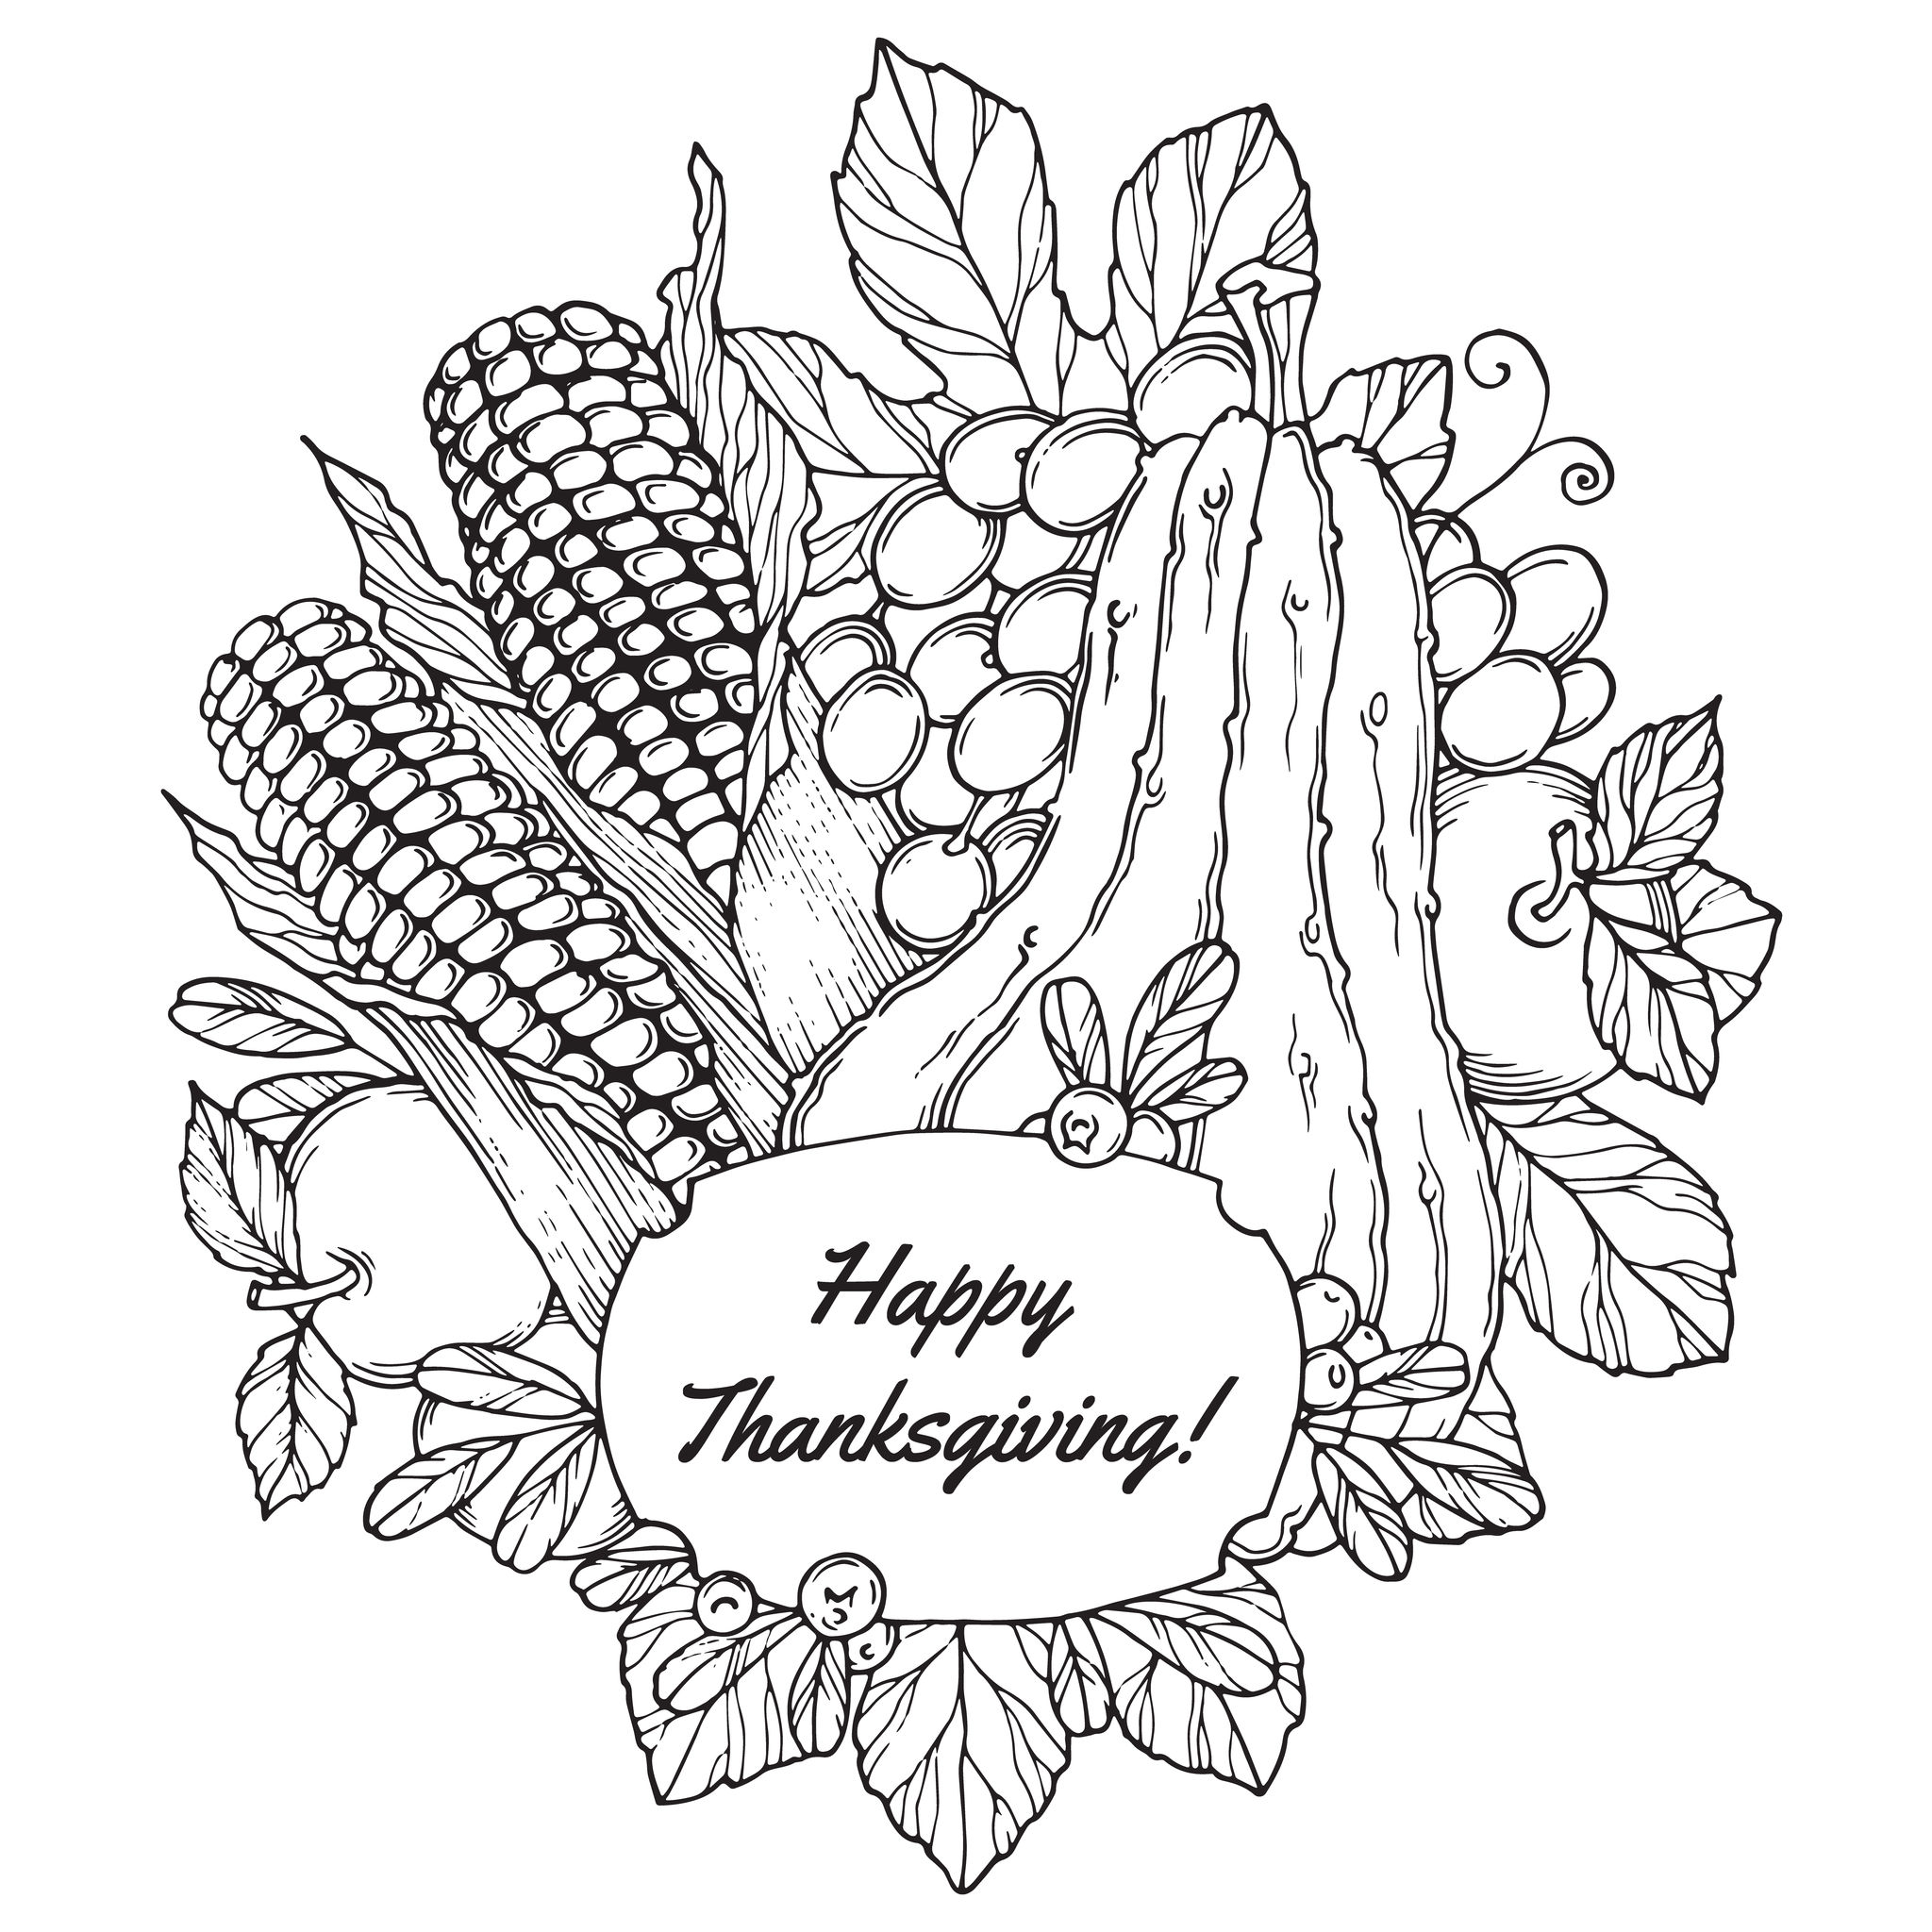 Disegni da colorare per adulti : Thanksgiving - 3, Artista : Frauleinfreya   Fonte : 123rf